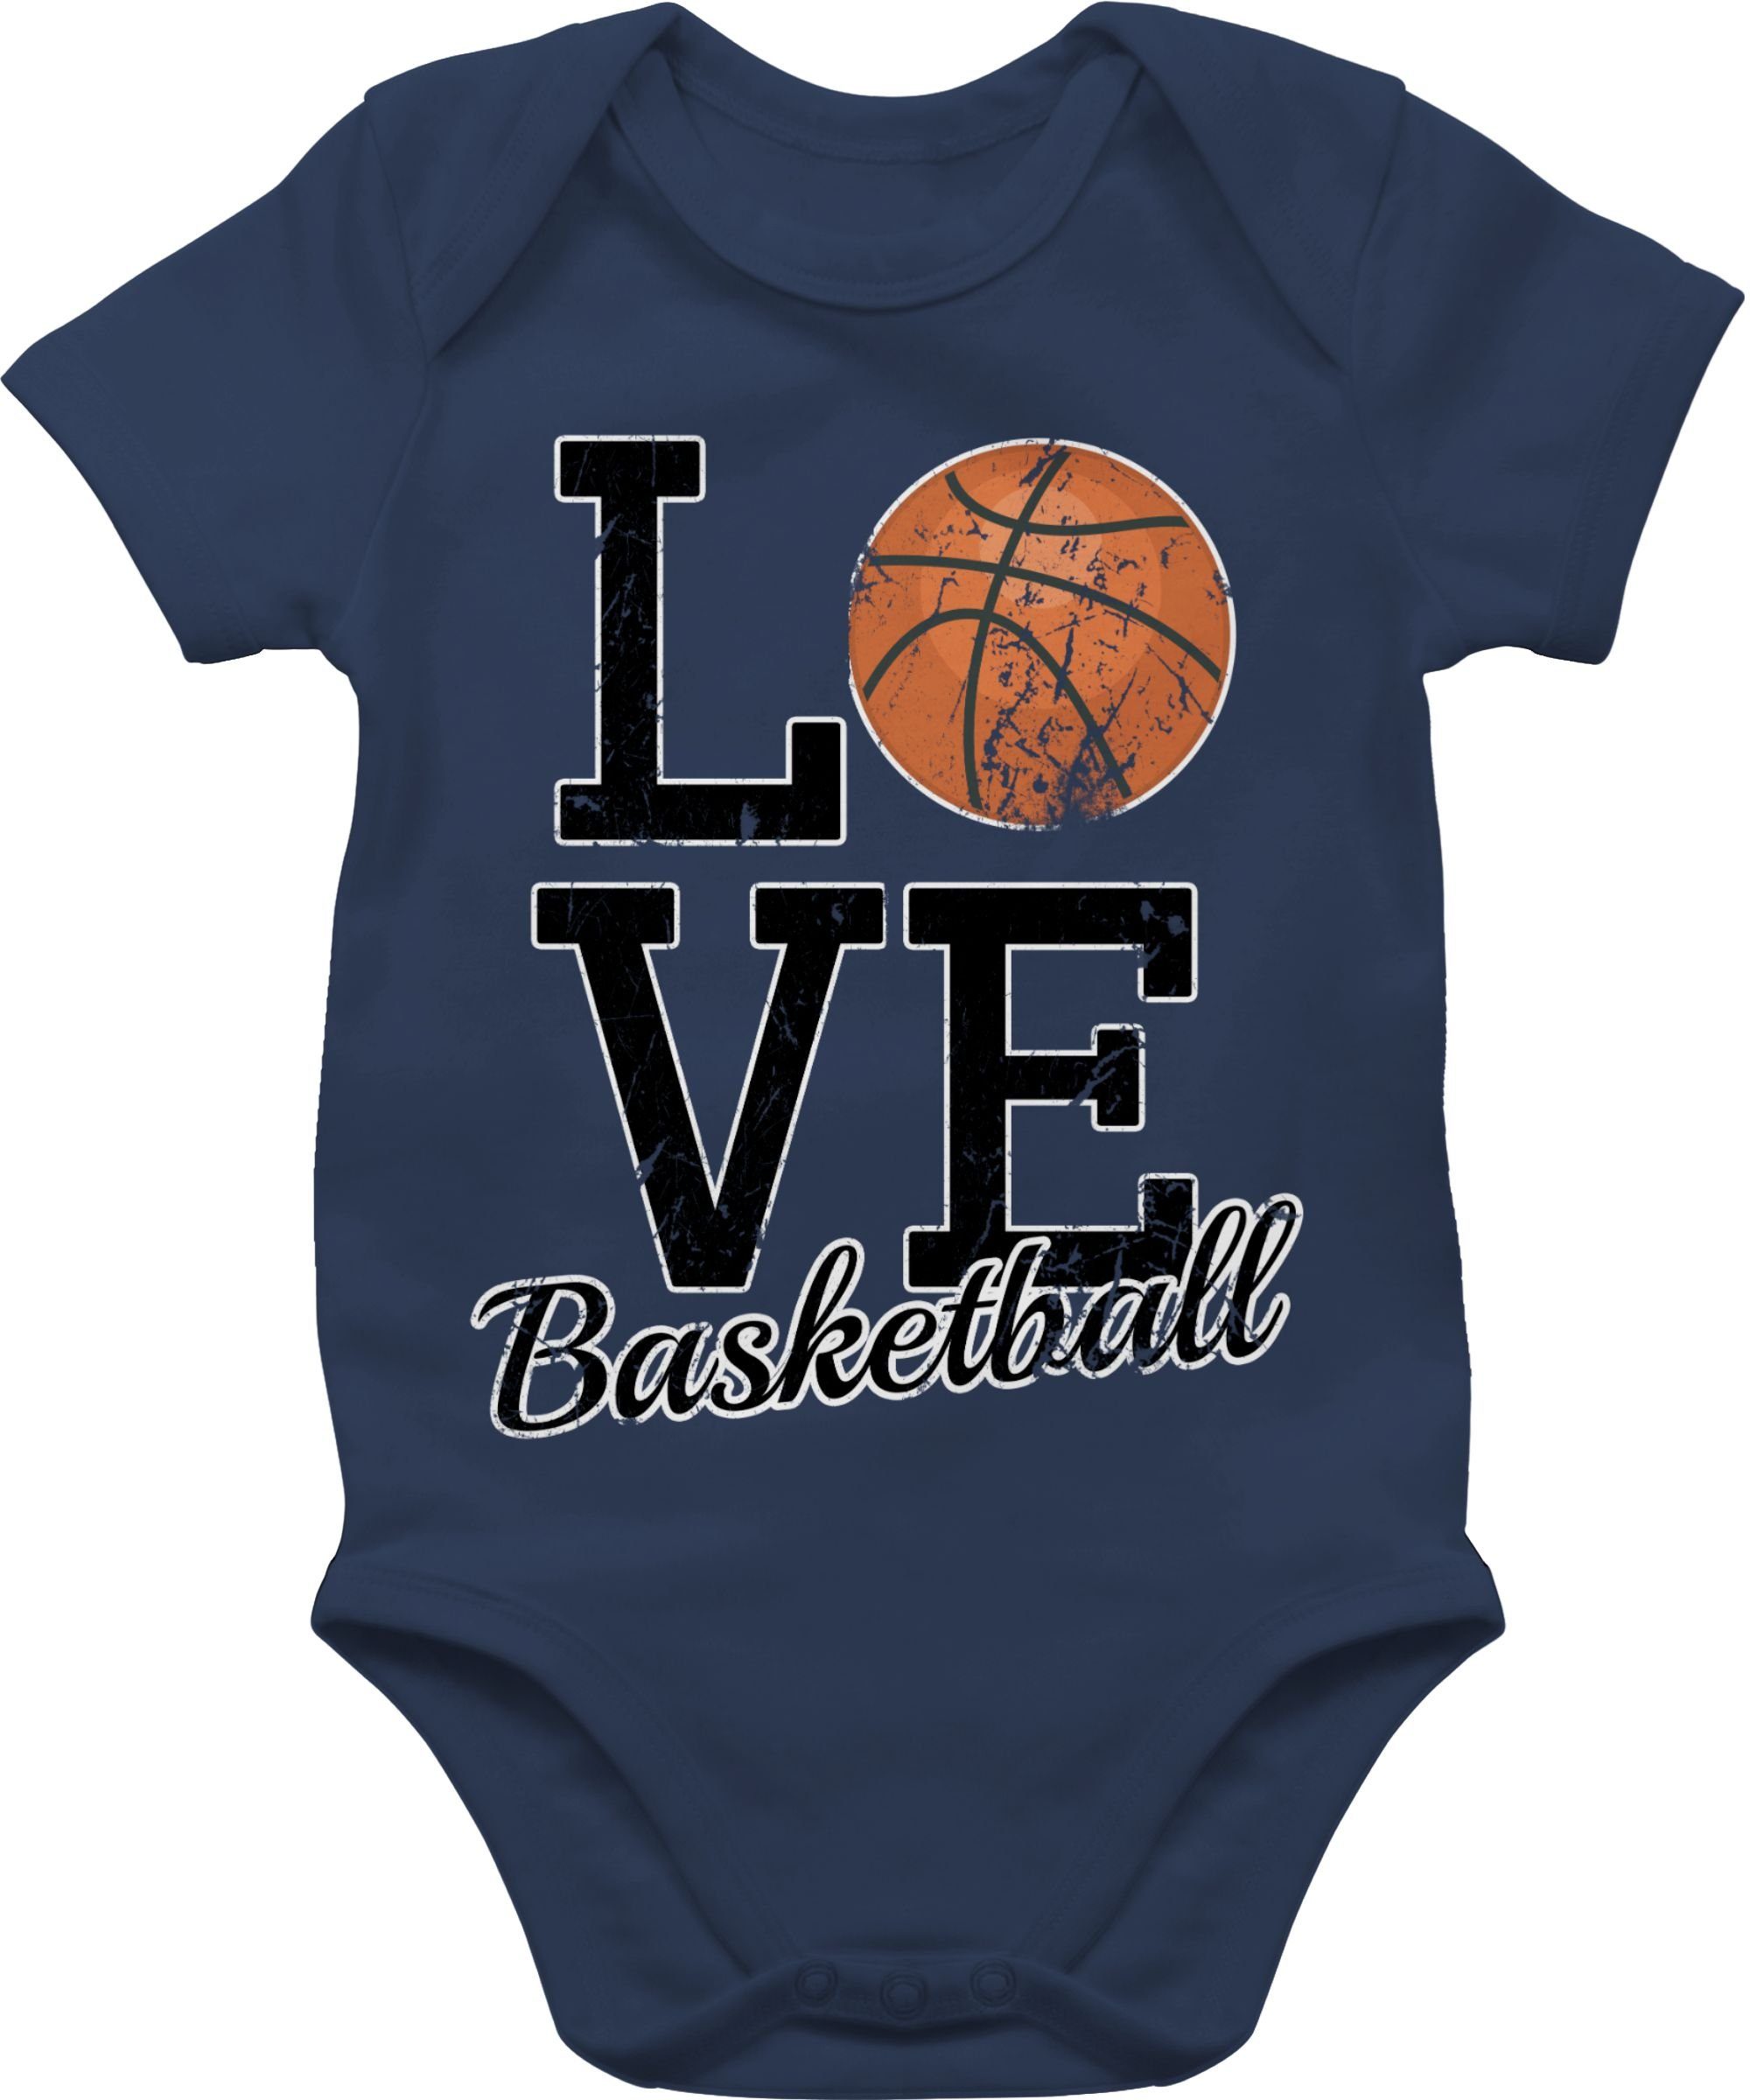 Shirtracer Shirtbody Love Baby Bewegung & Basketball Blau Navy 3 Sport